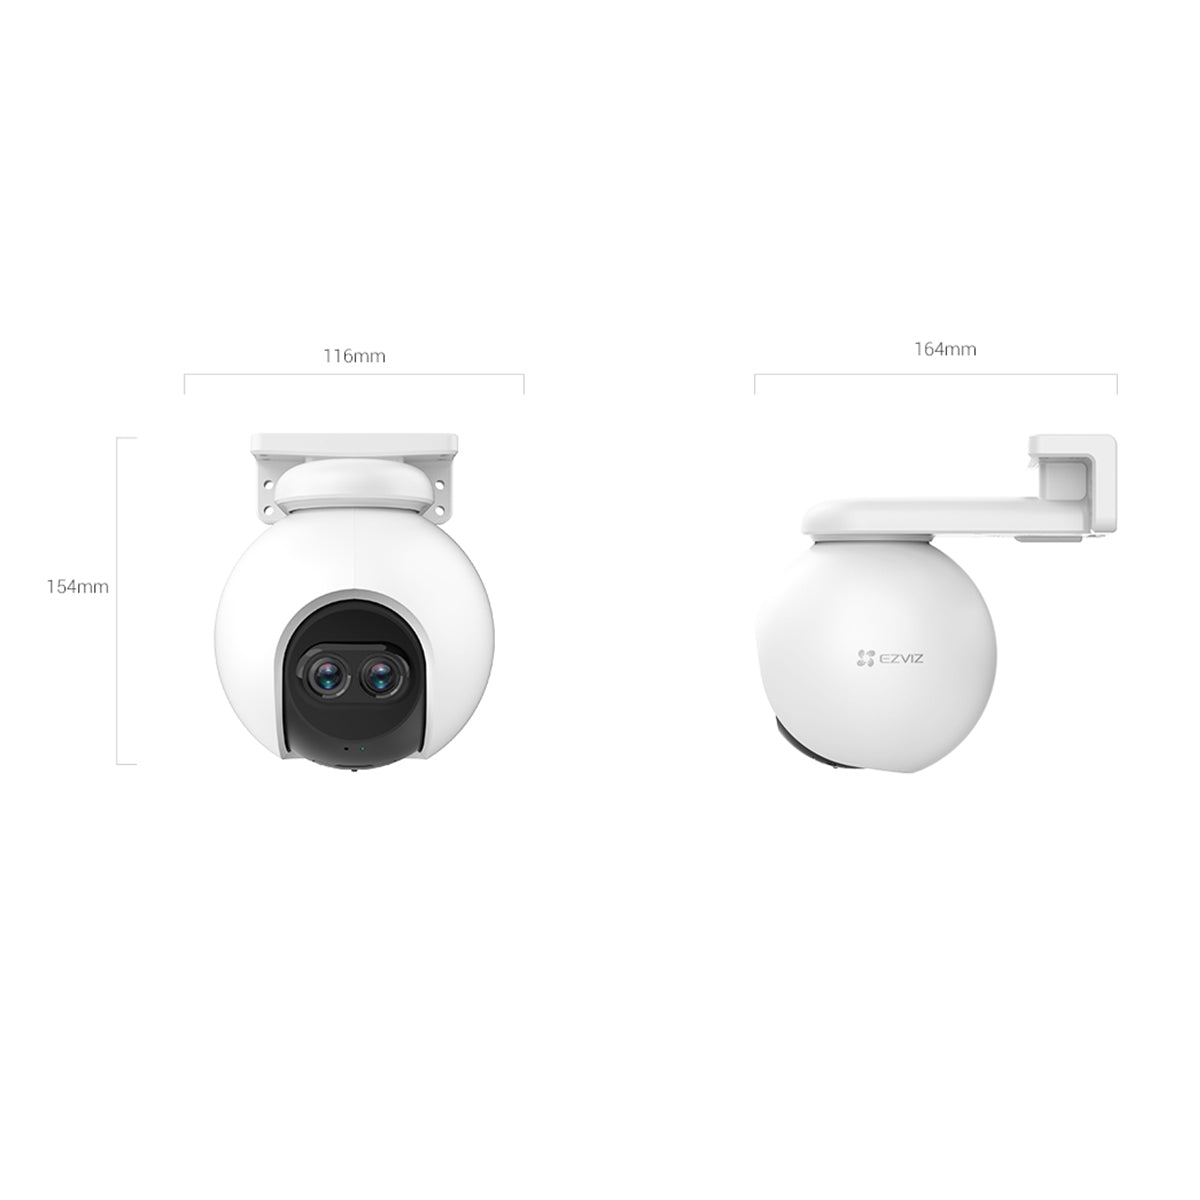 Ezviz C8PF Dual Lens Pan and Tilt 2MP camera CS-C8PF-A0-6E22W Product Dimensions CC599-8